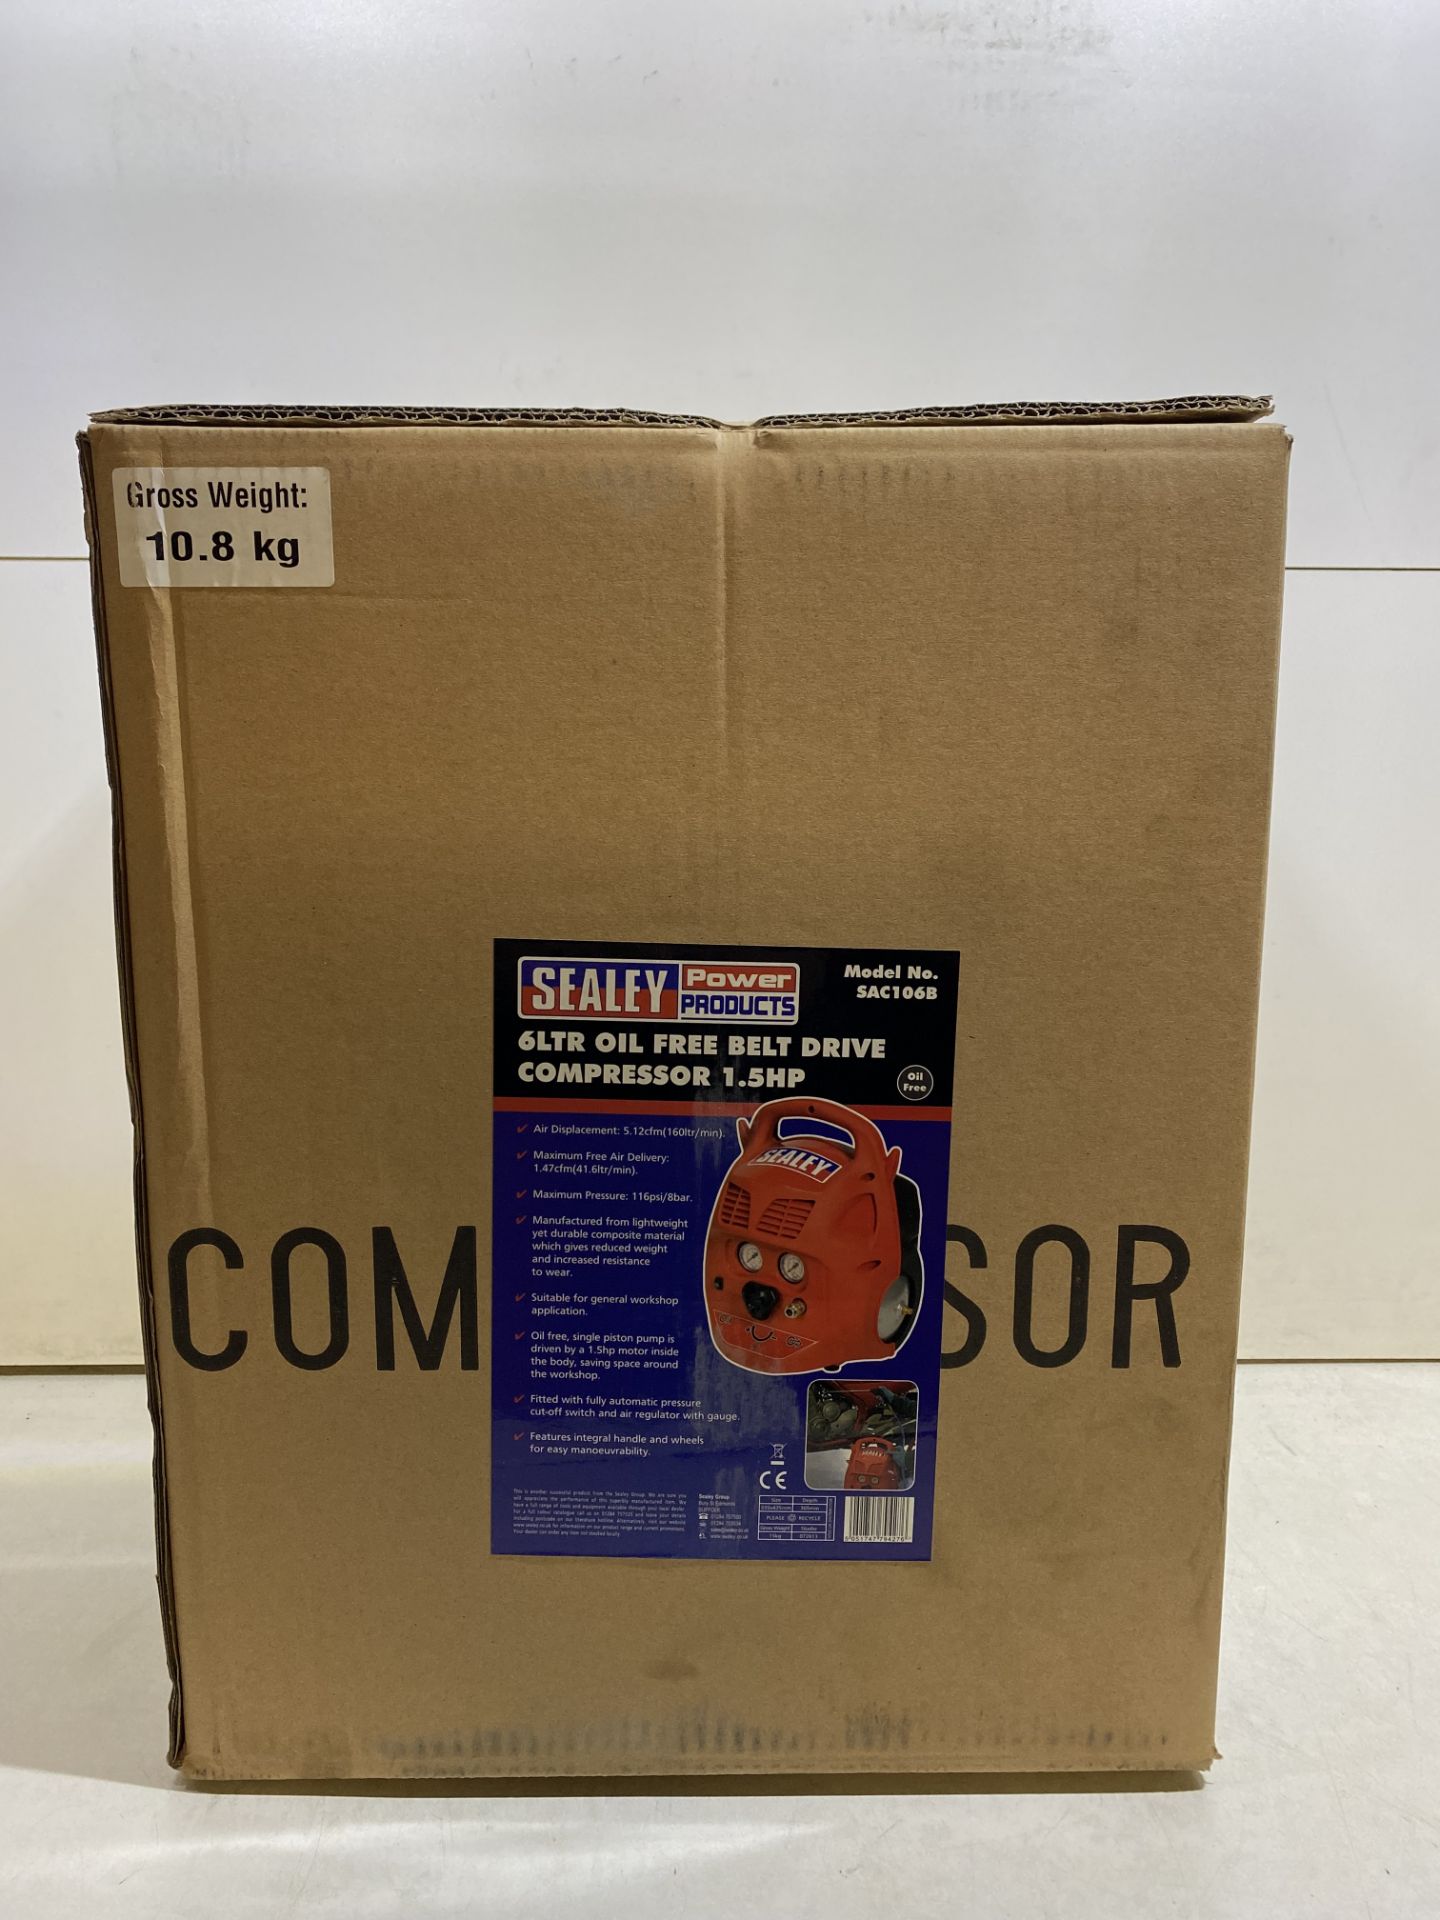 Sealey SAC106B 6 LTR Oil Free Belt Drive Compressor | RRP £165 - Image 2 of 2